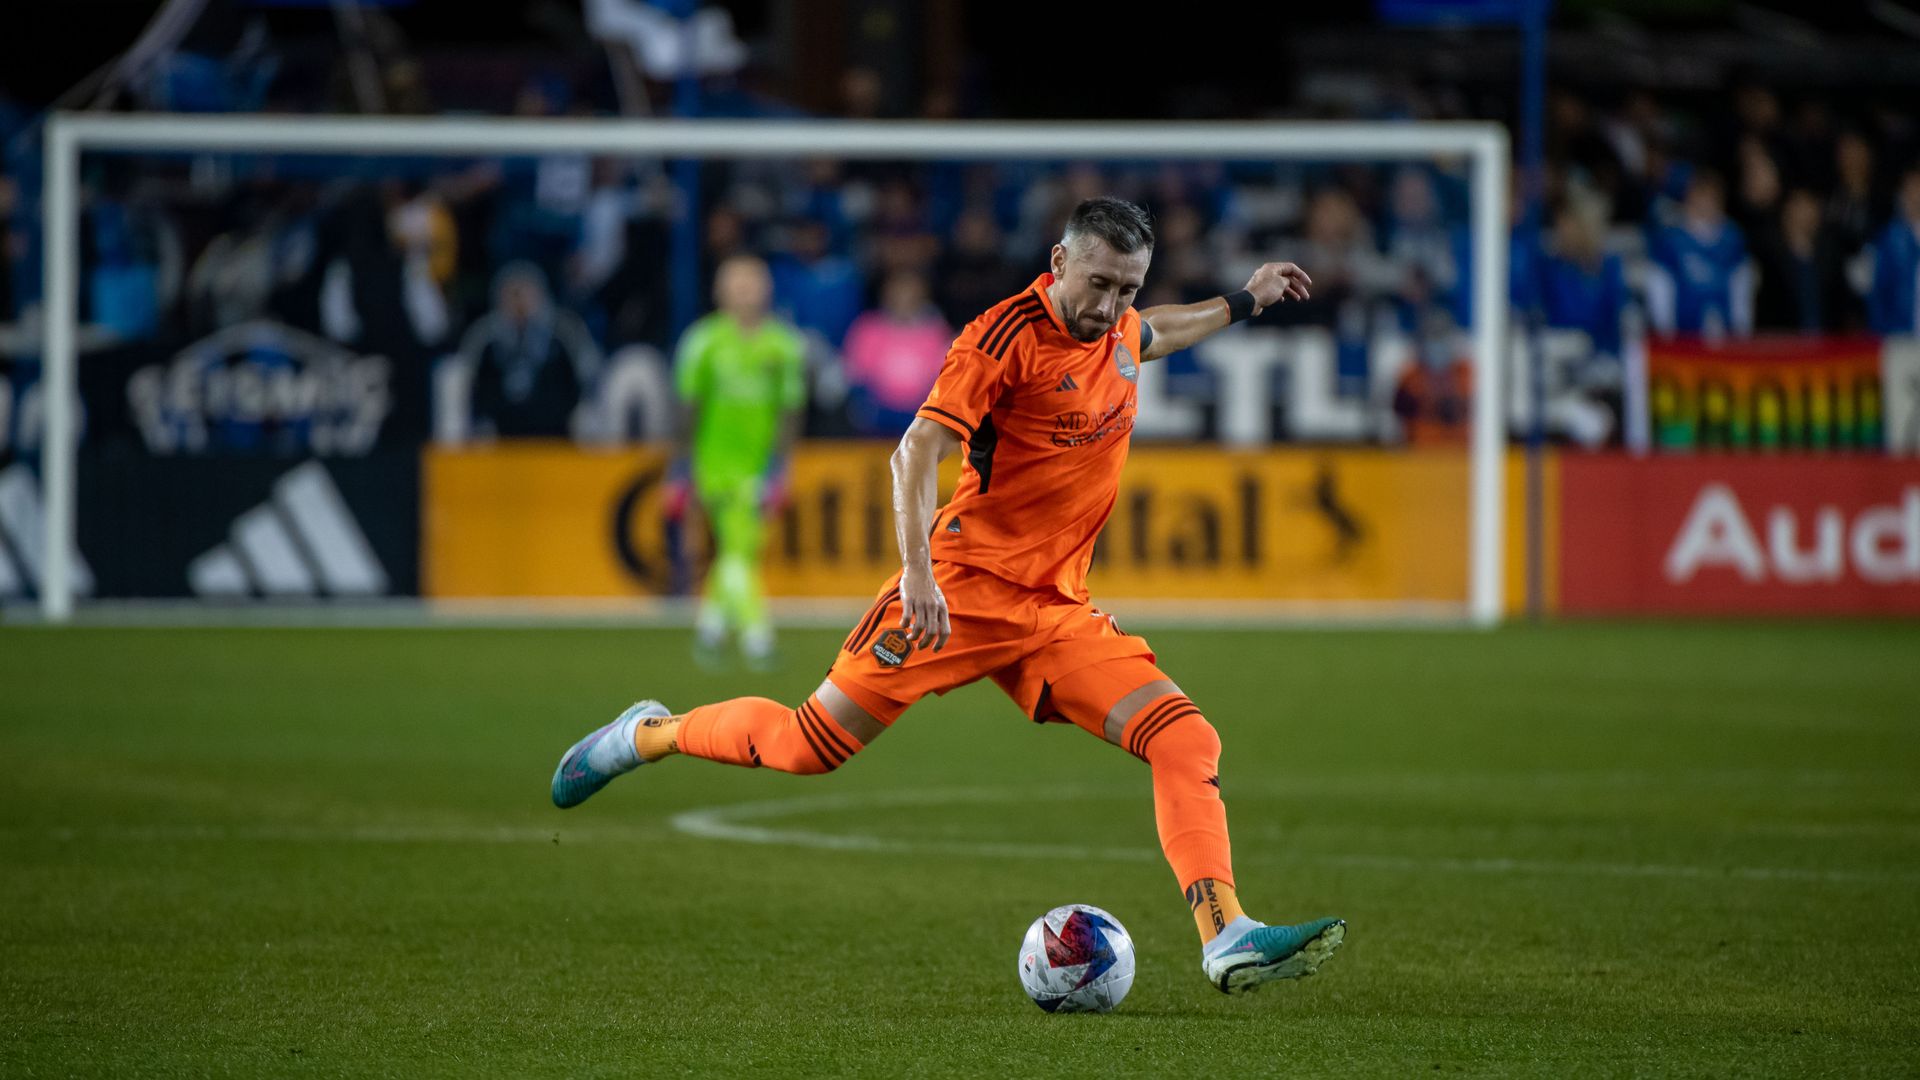 The Dynamo's Hector Herrera, wearing an orange professional soccer uniform, sets up a kick 